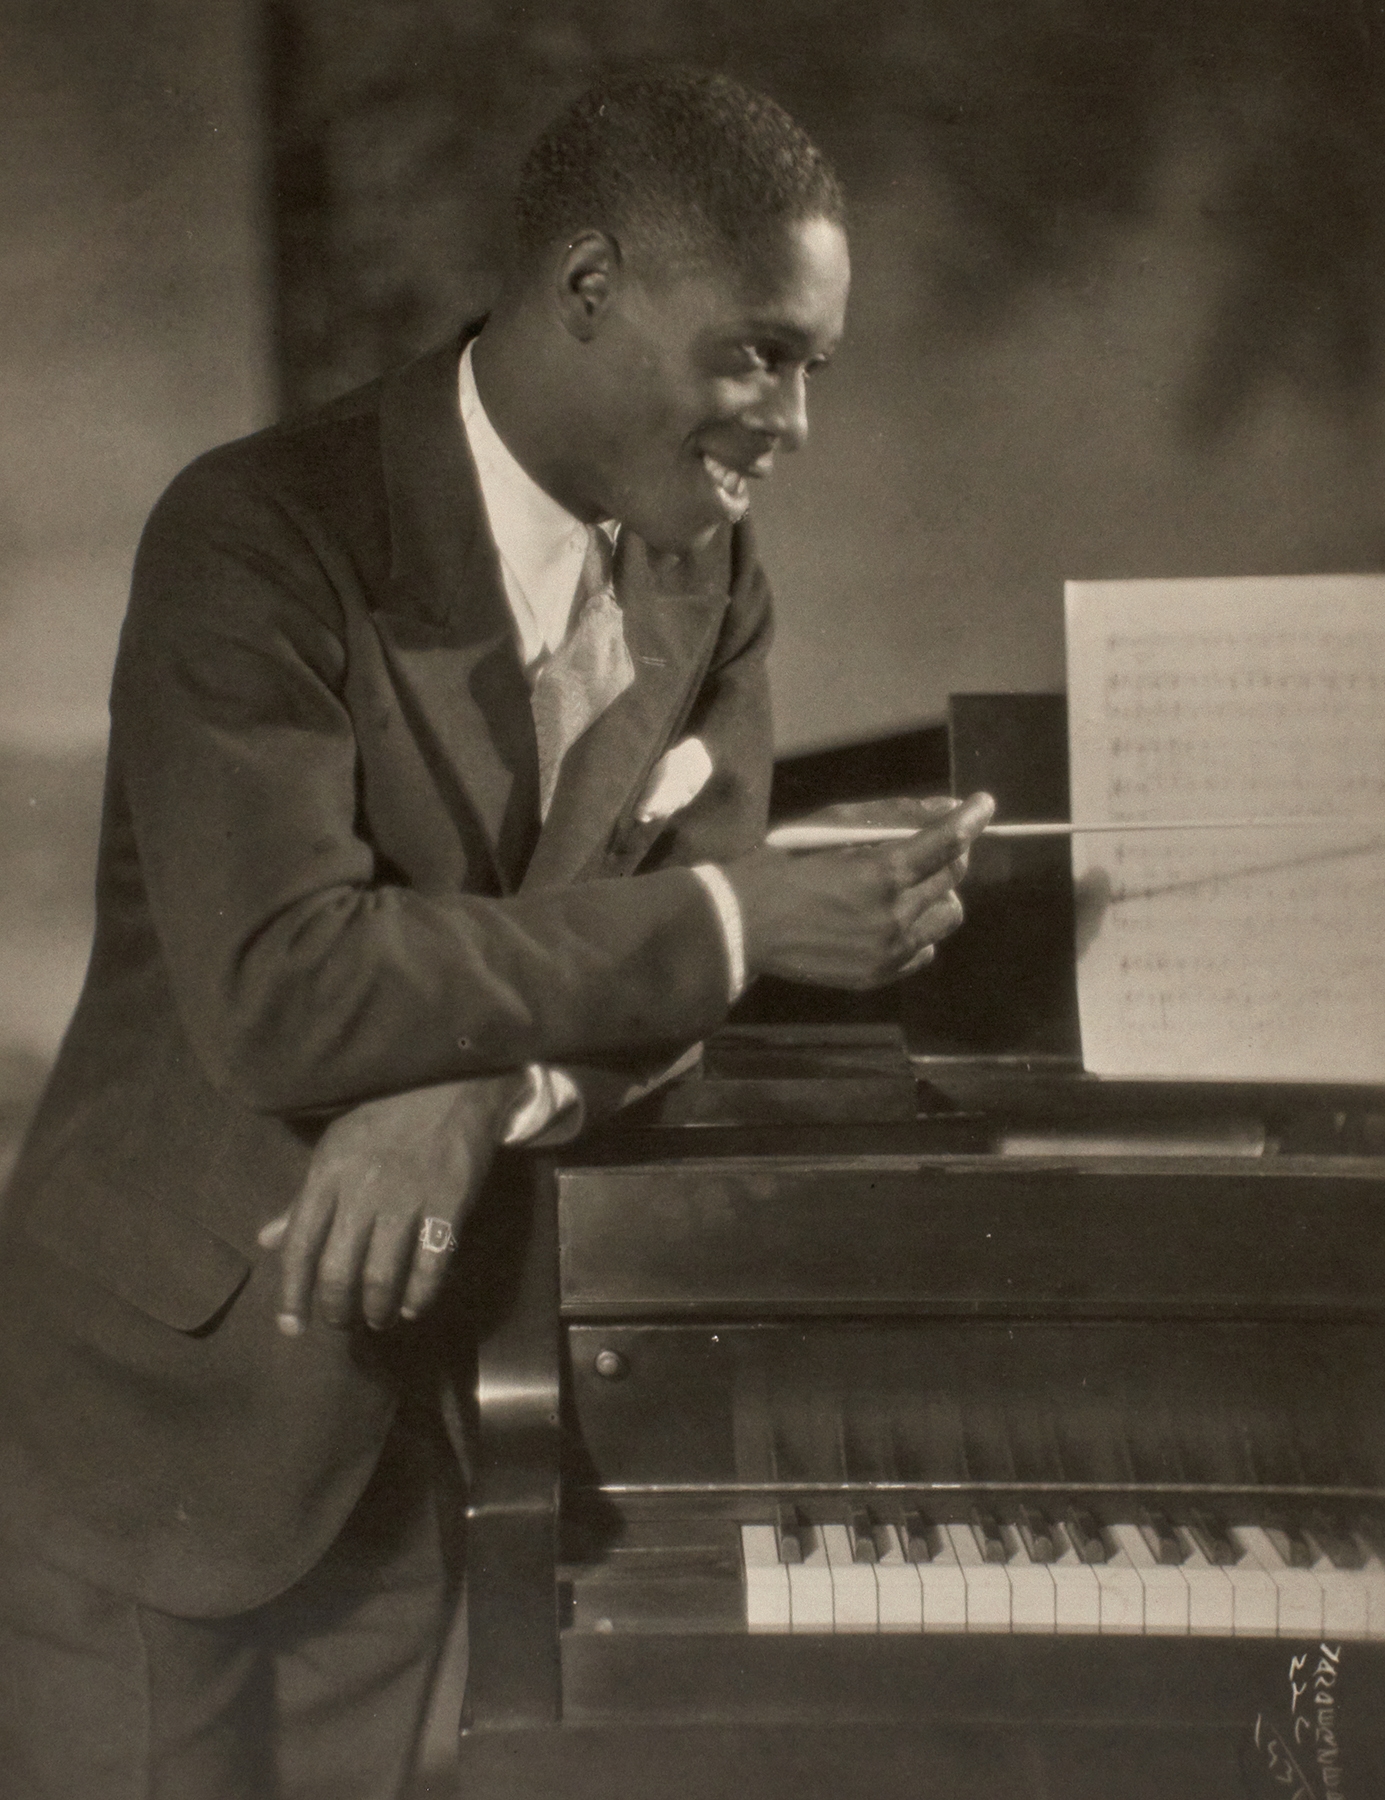 Harlem Musician by James van der Zee, 1931